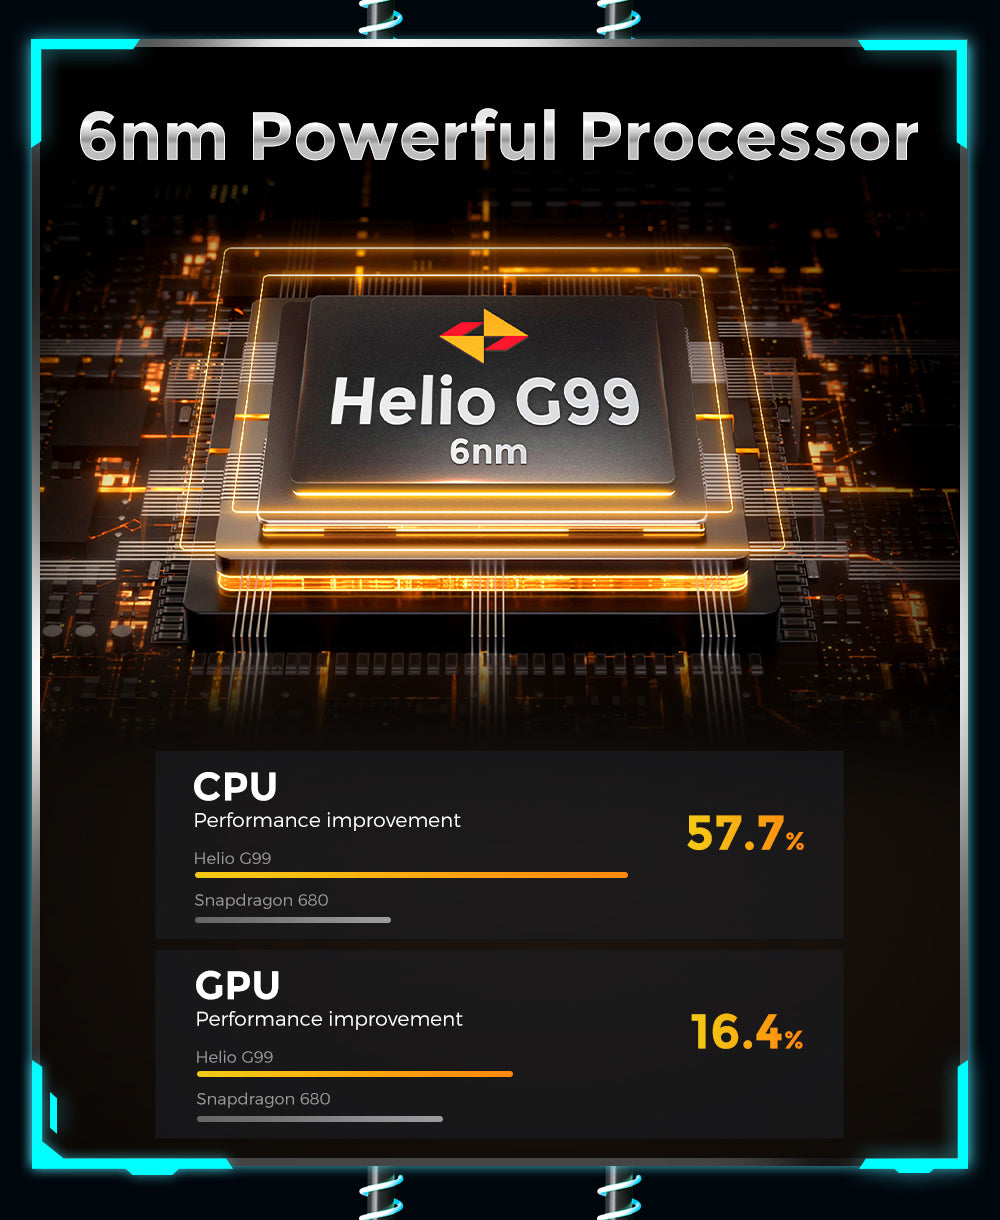 6nm Powerfull Processor